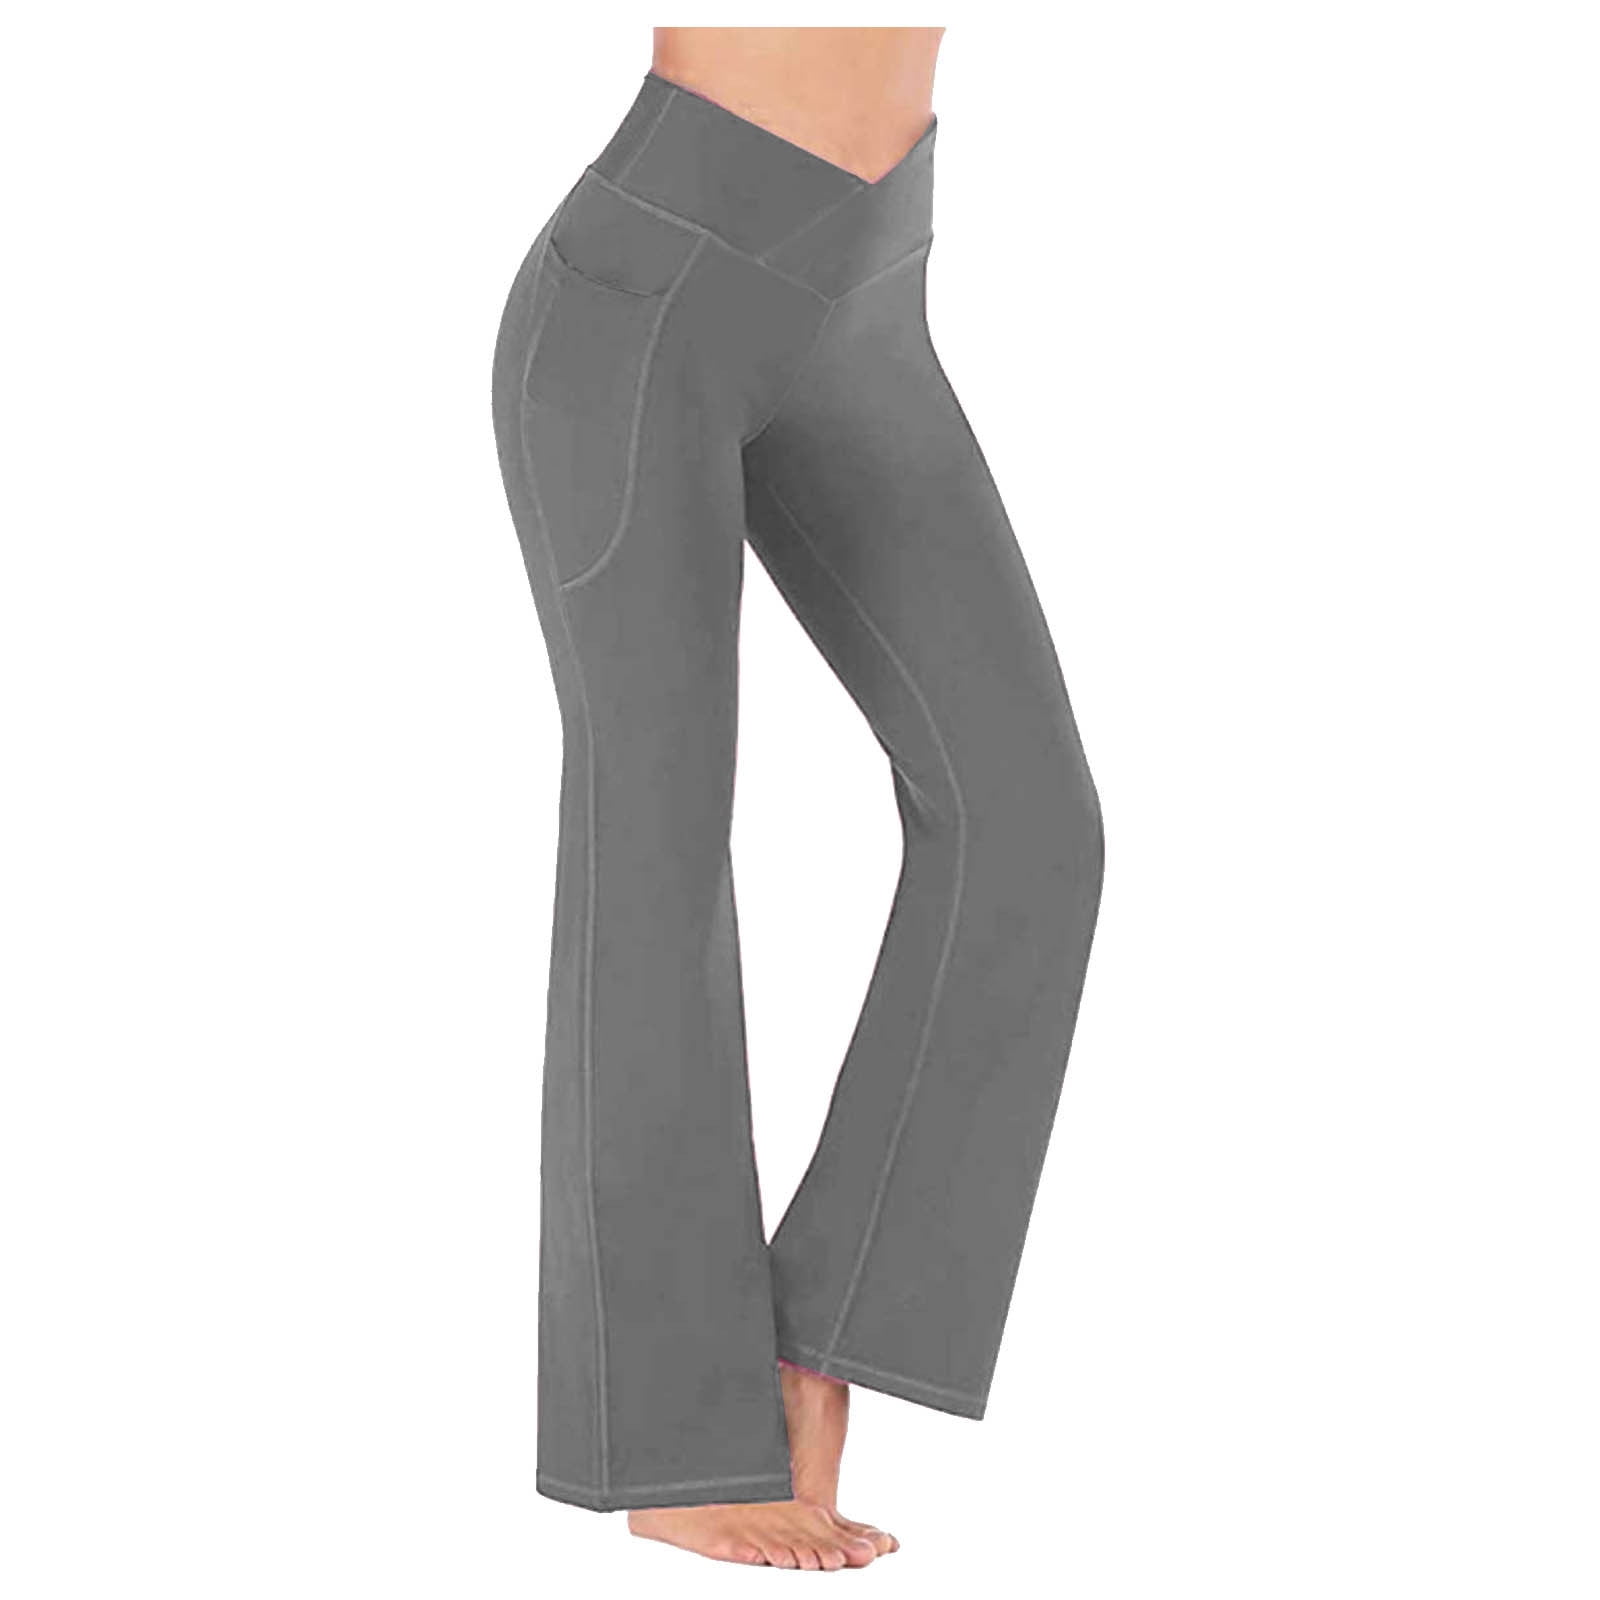 Innerwin Bottoms Boot Cut Ladies Leggings Workout High Waist Full-length  Yoga Pants Gray L